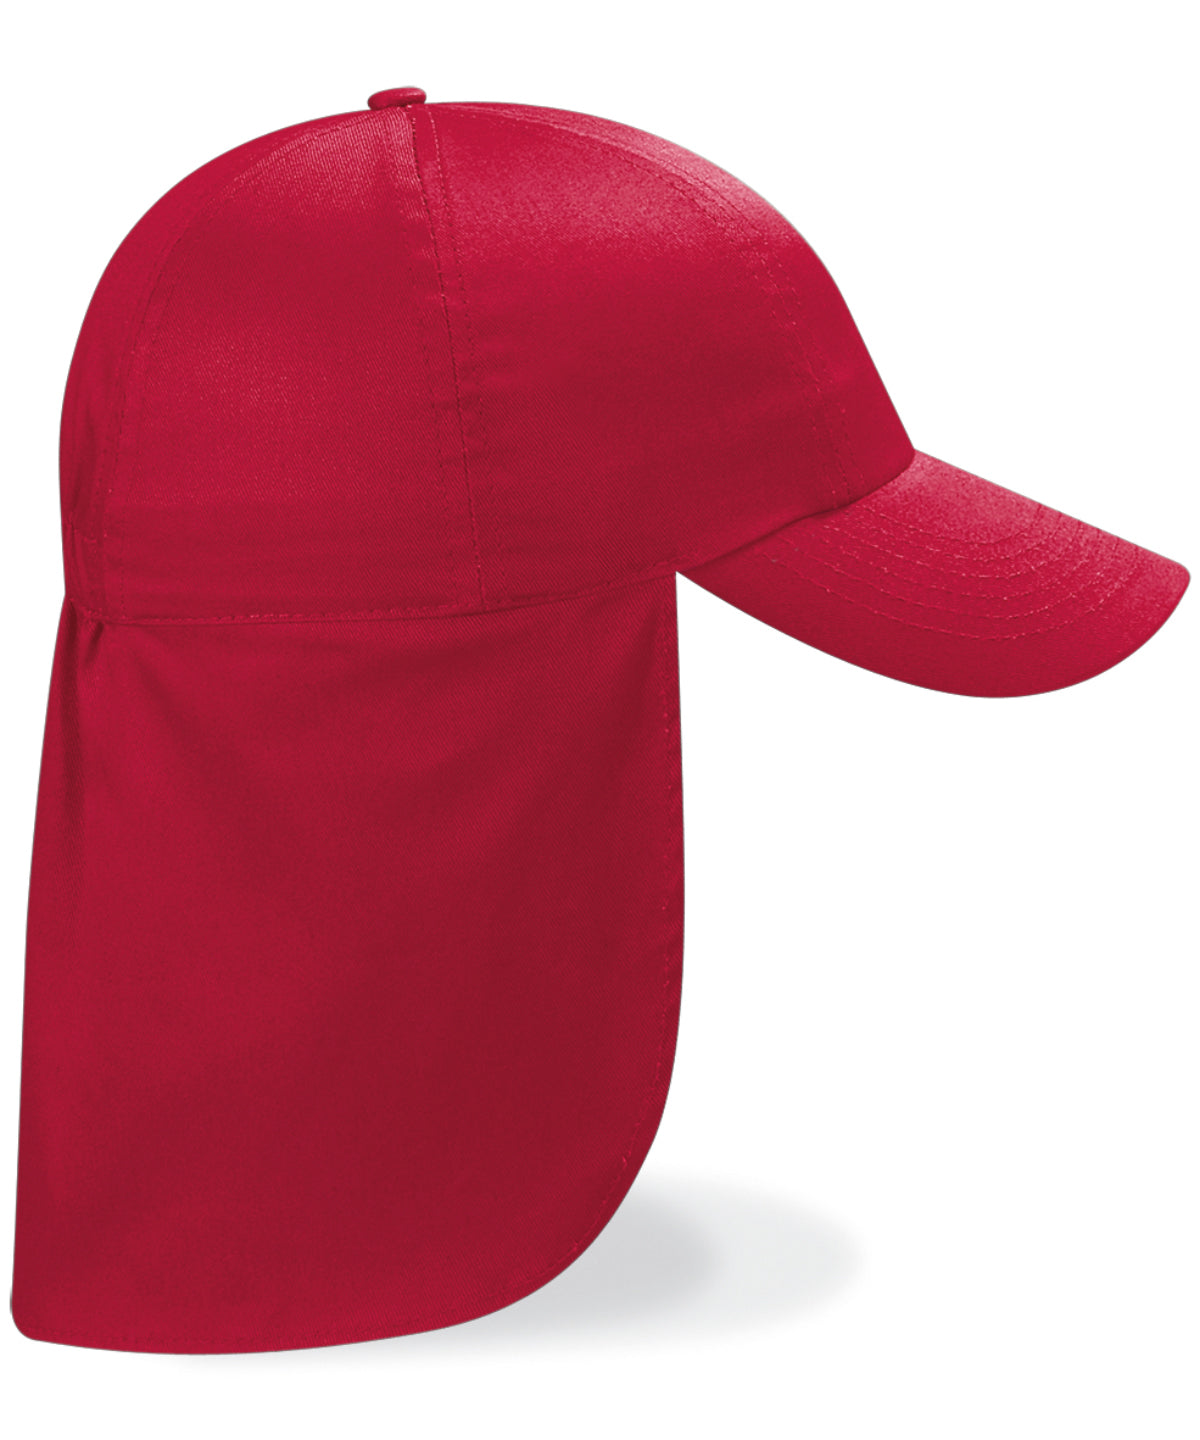 Personalised Caps - Mid Red Beechfield Junior legionnaire-style cap